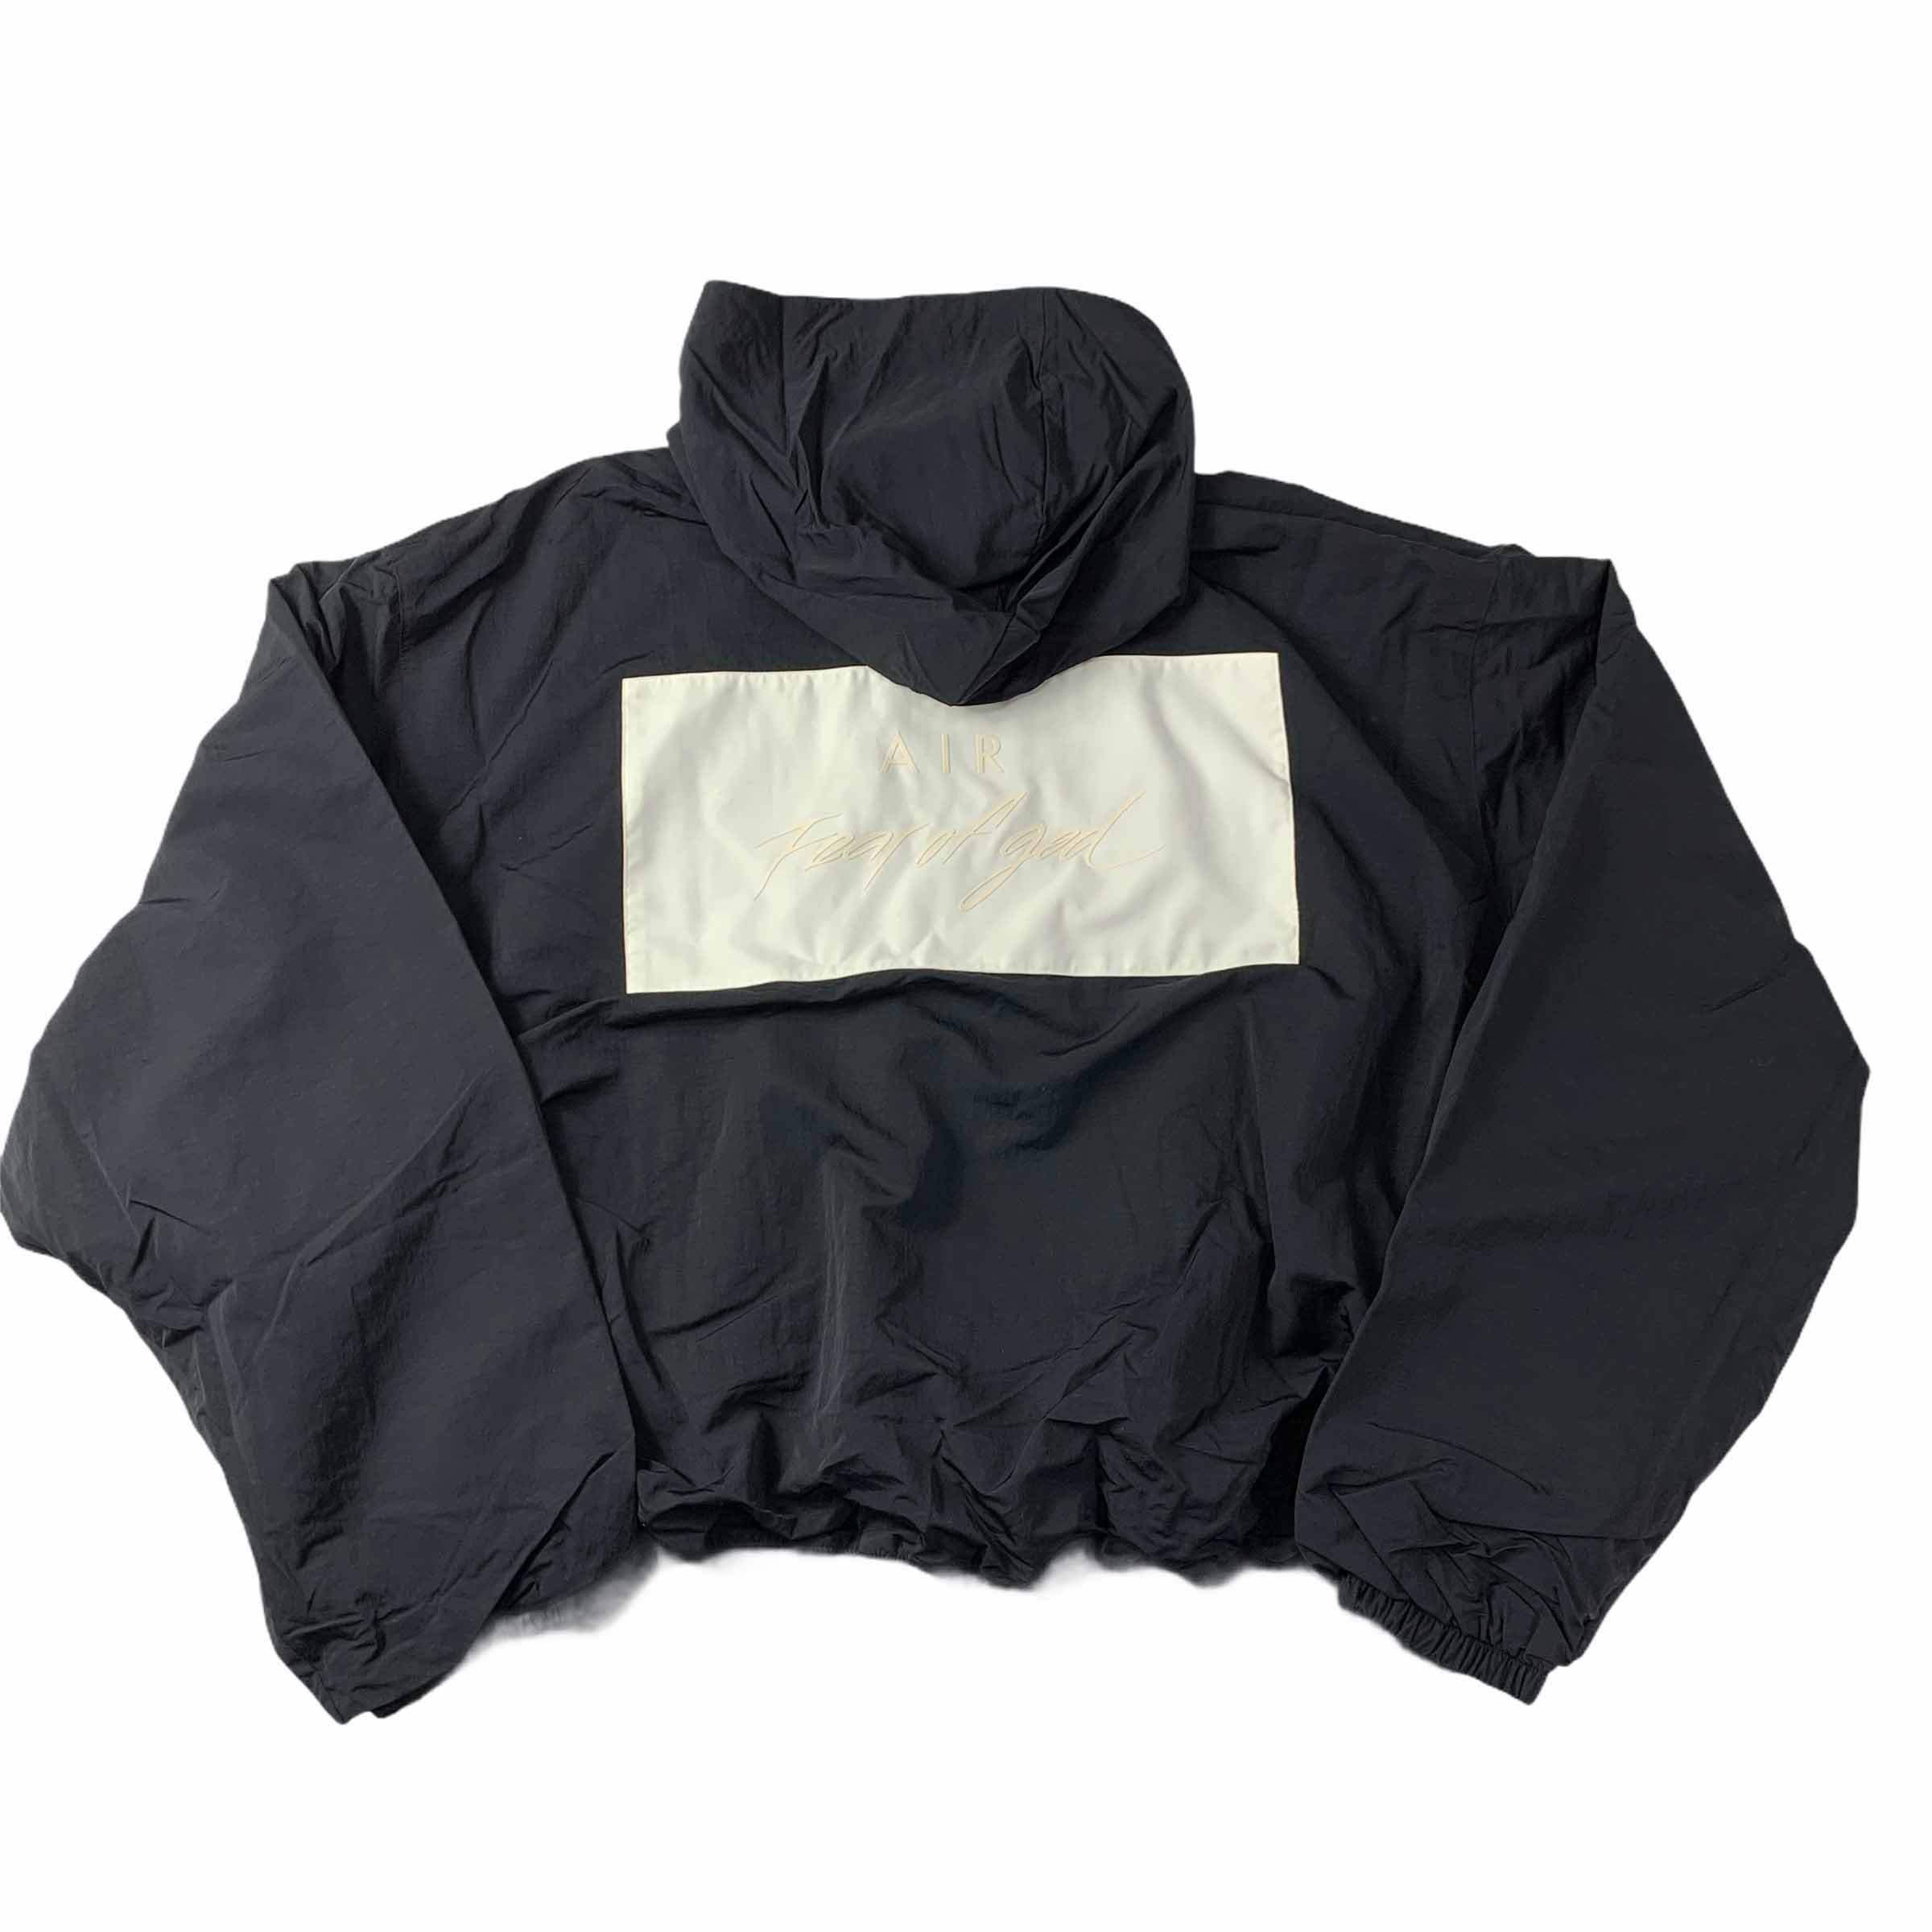 [Nike x Fear of God] Jacket BK - Size L